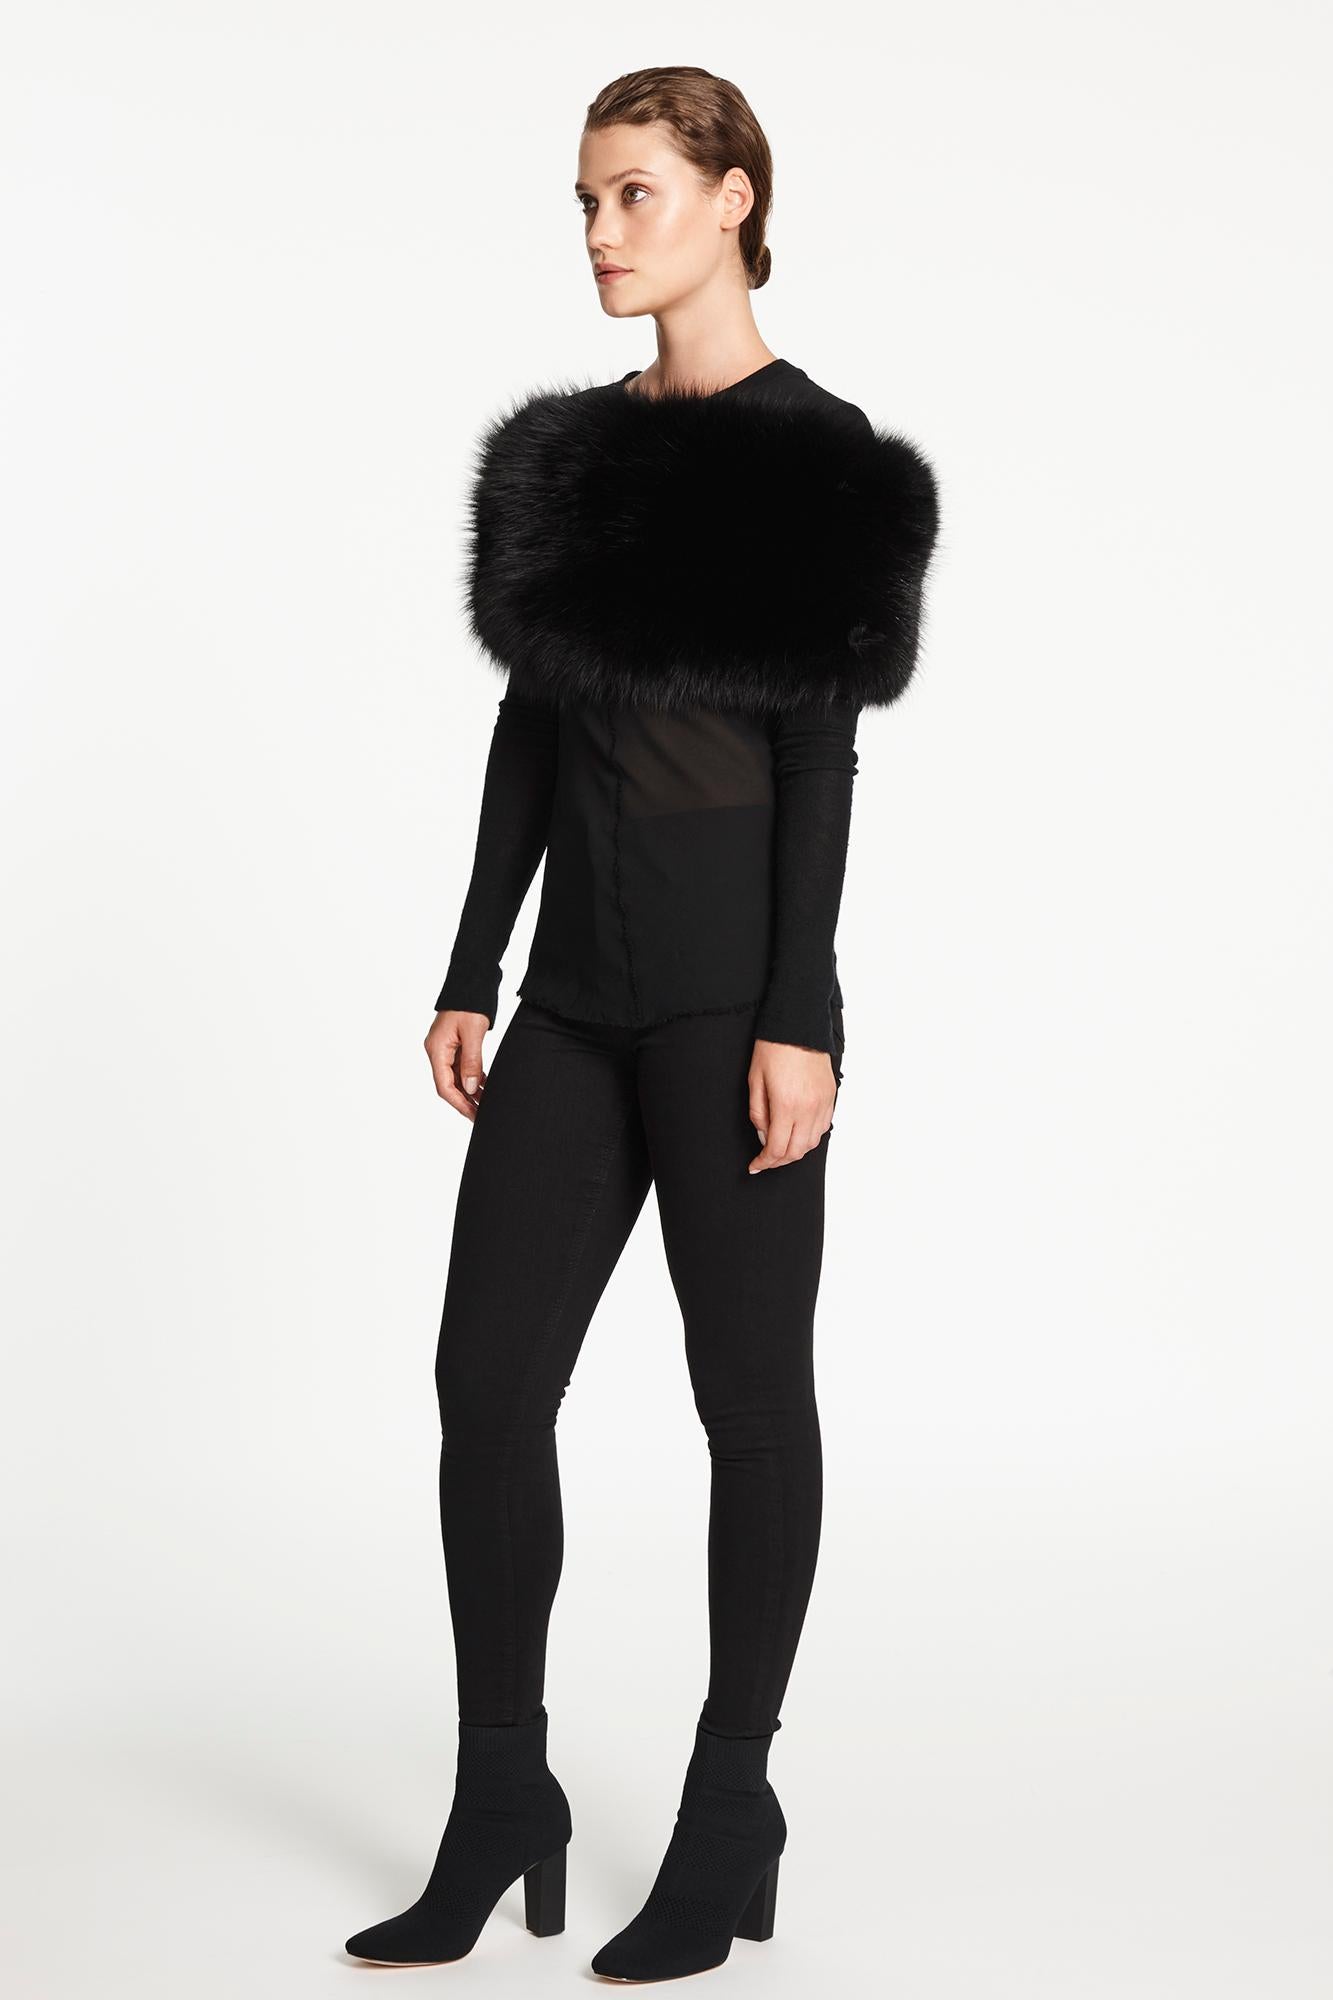 Verheyen London Chained Stole in Black Fox Fur & Chain - Brand New 10